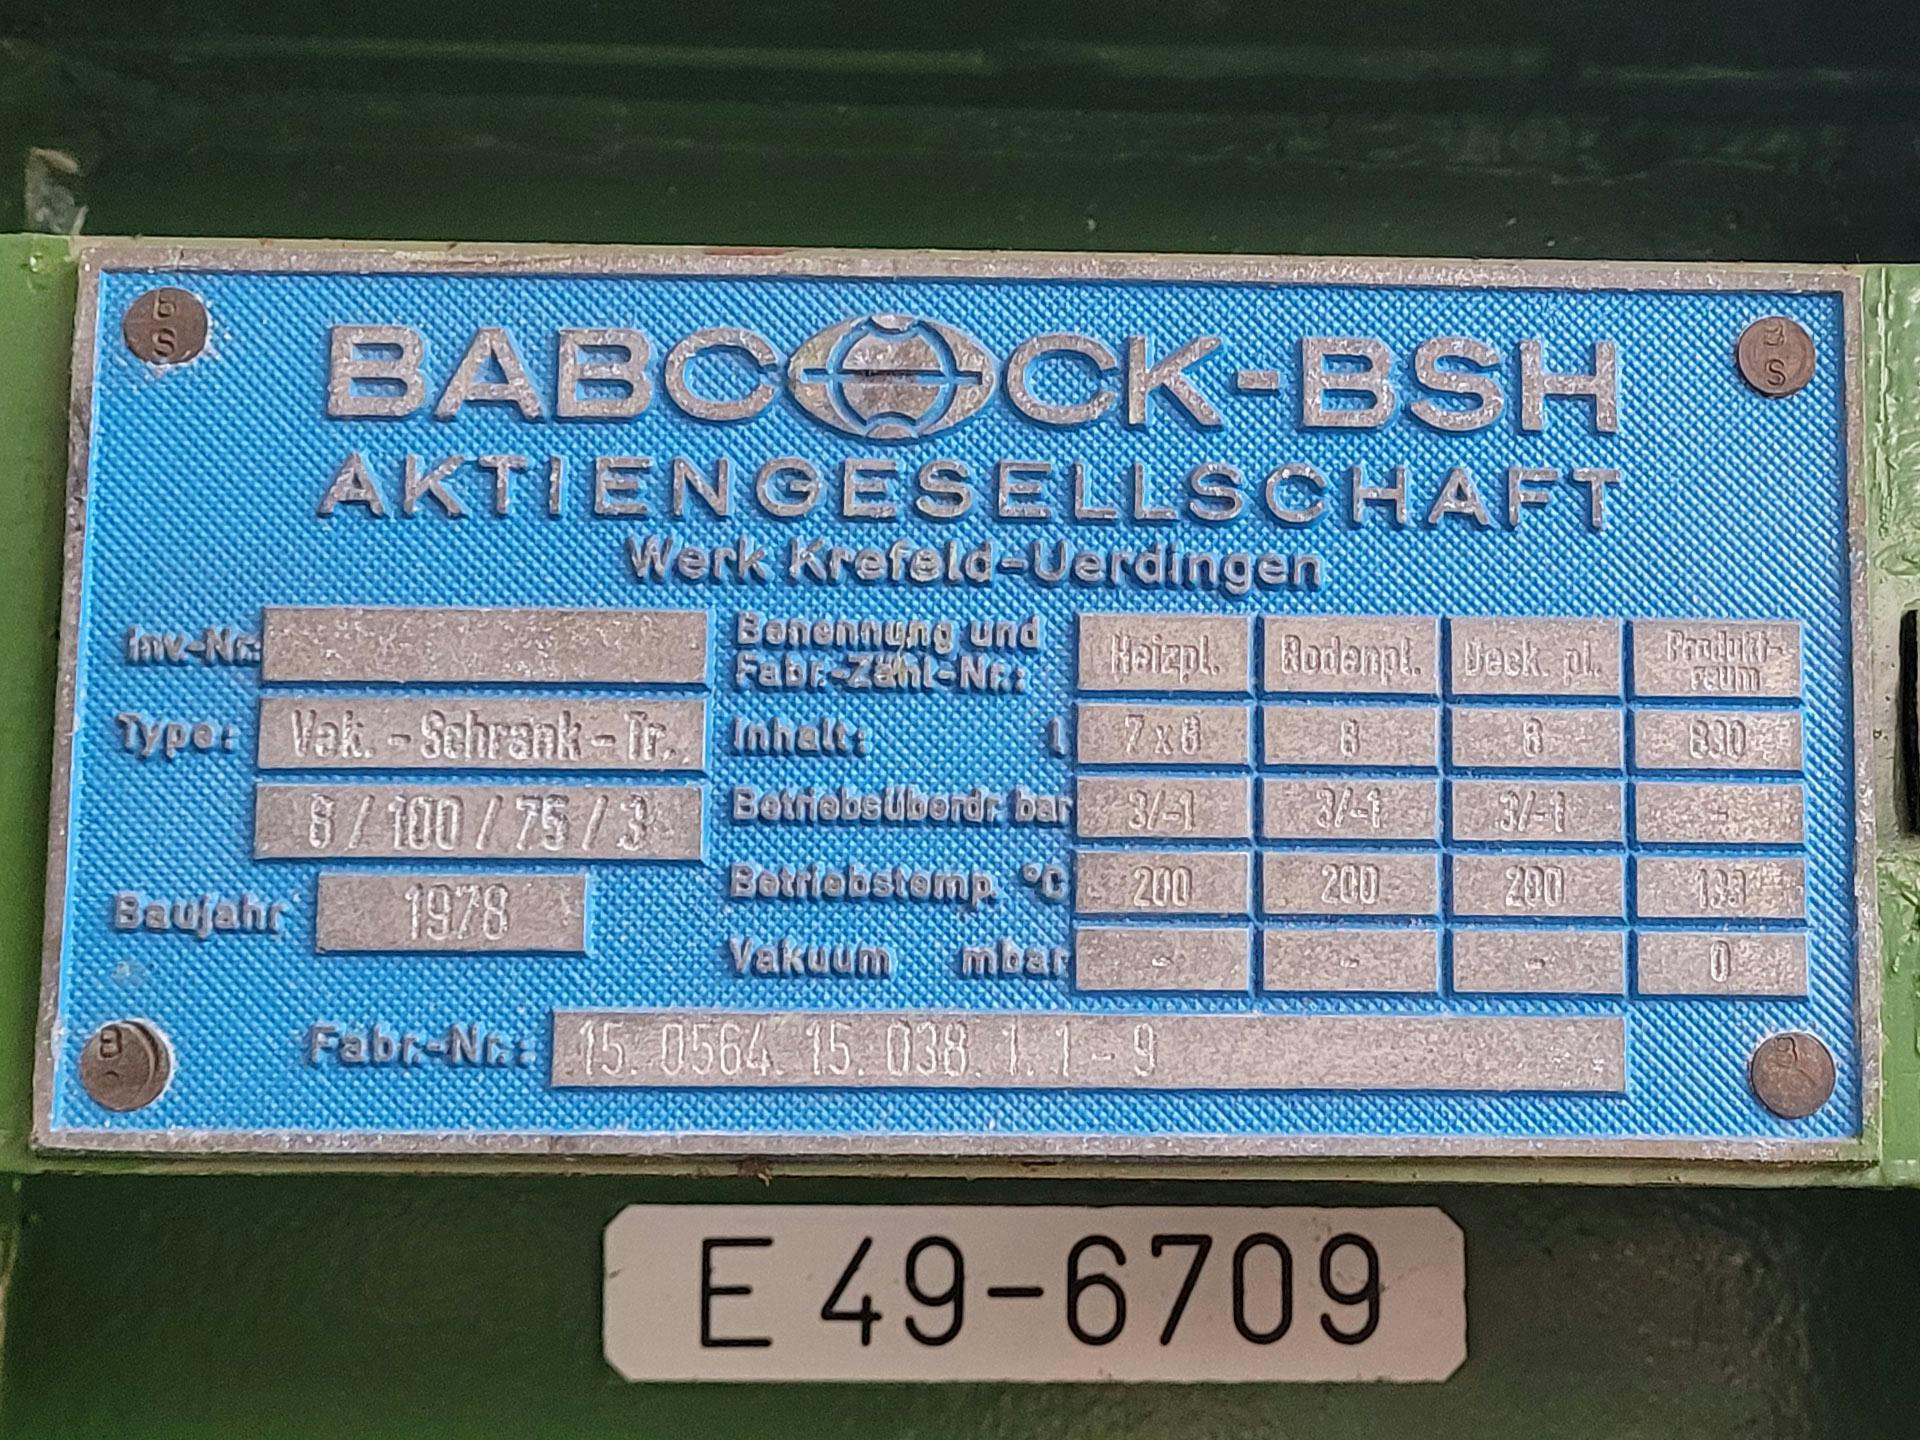 Babcock-BSH 8/100/75-3 - Полочная сушилка - image 4